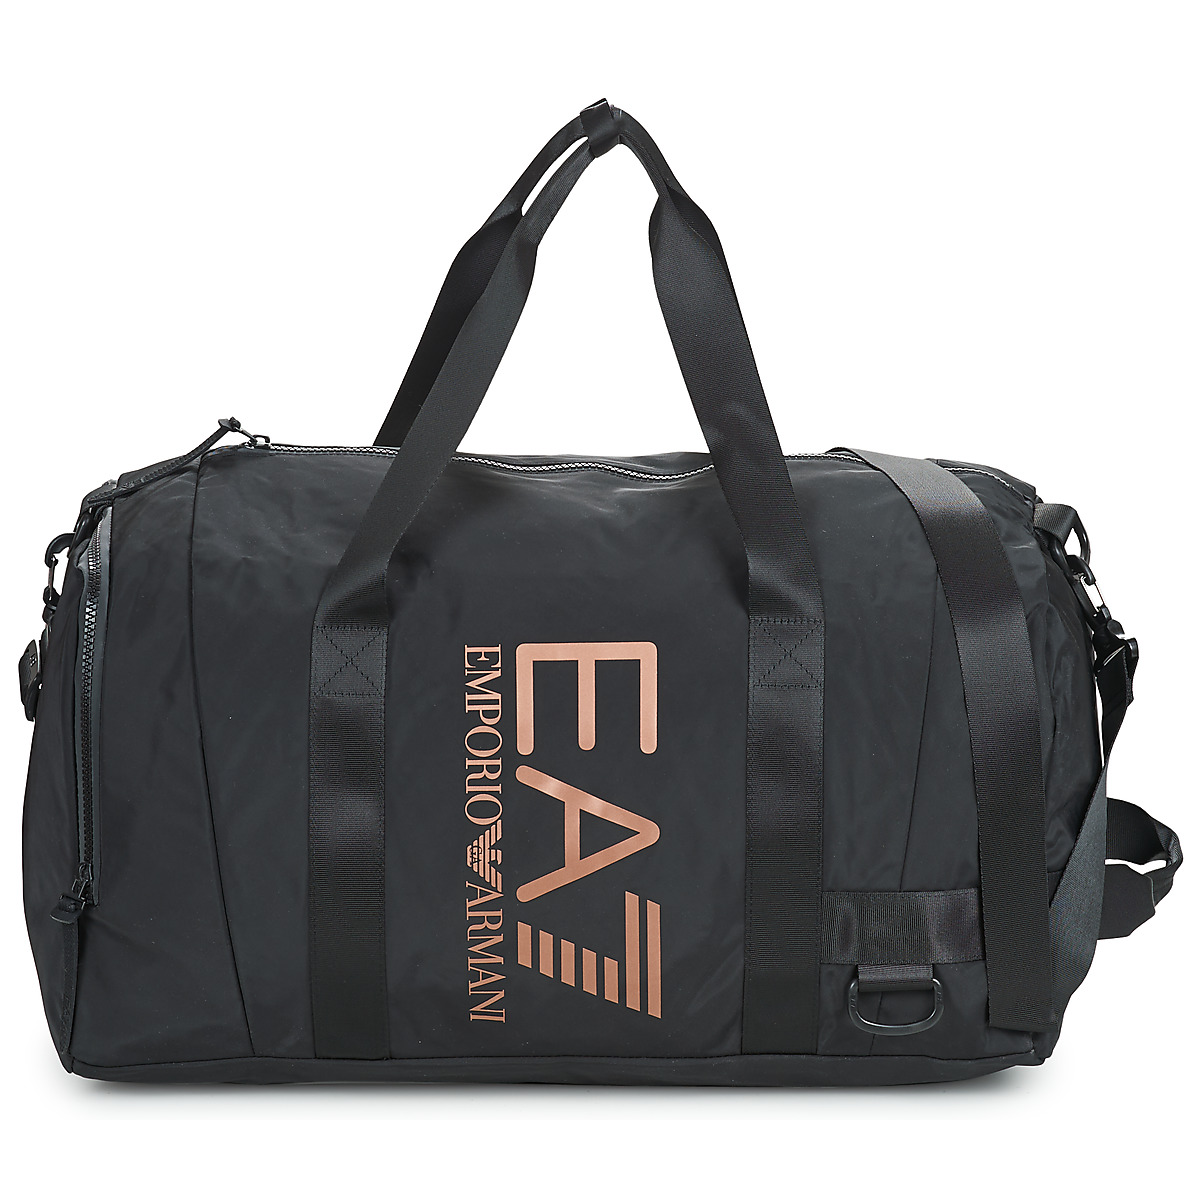 Emporio Armani EA7 VIGOR7 U GYM BAG - UNISEX GYM BAG Black / Pink / Gold -  Free delivery | Spartoo NET ! - Bags Sports bags Women USD/$148.50